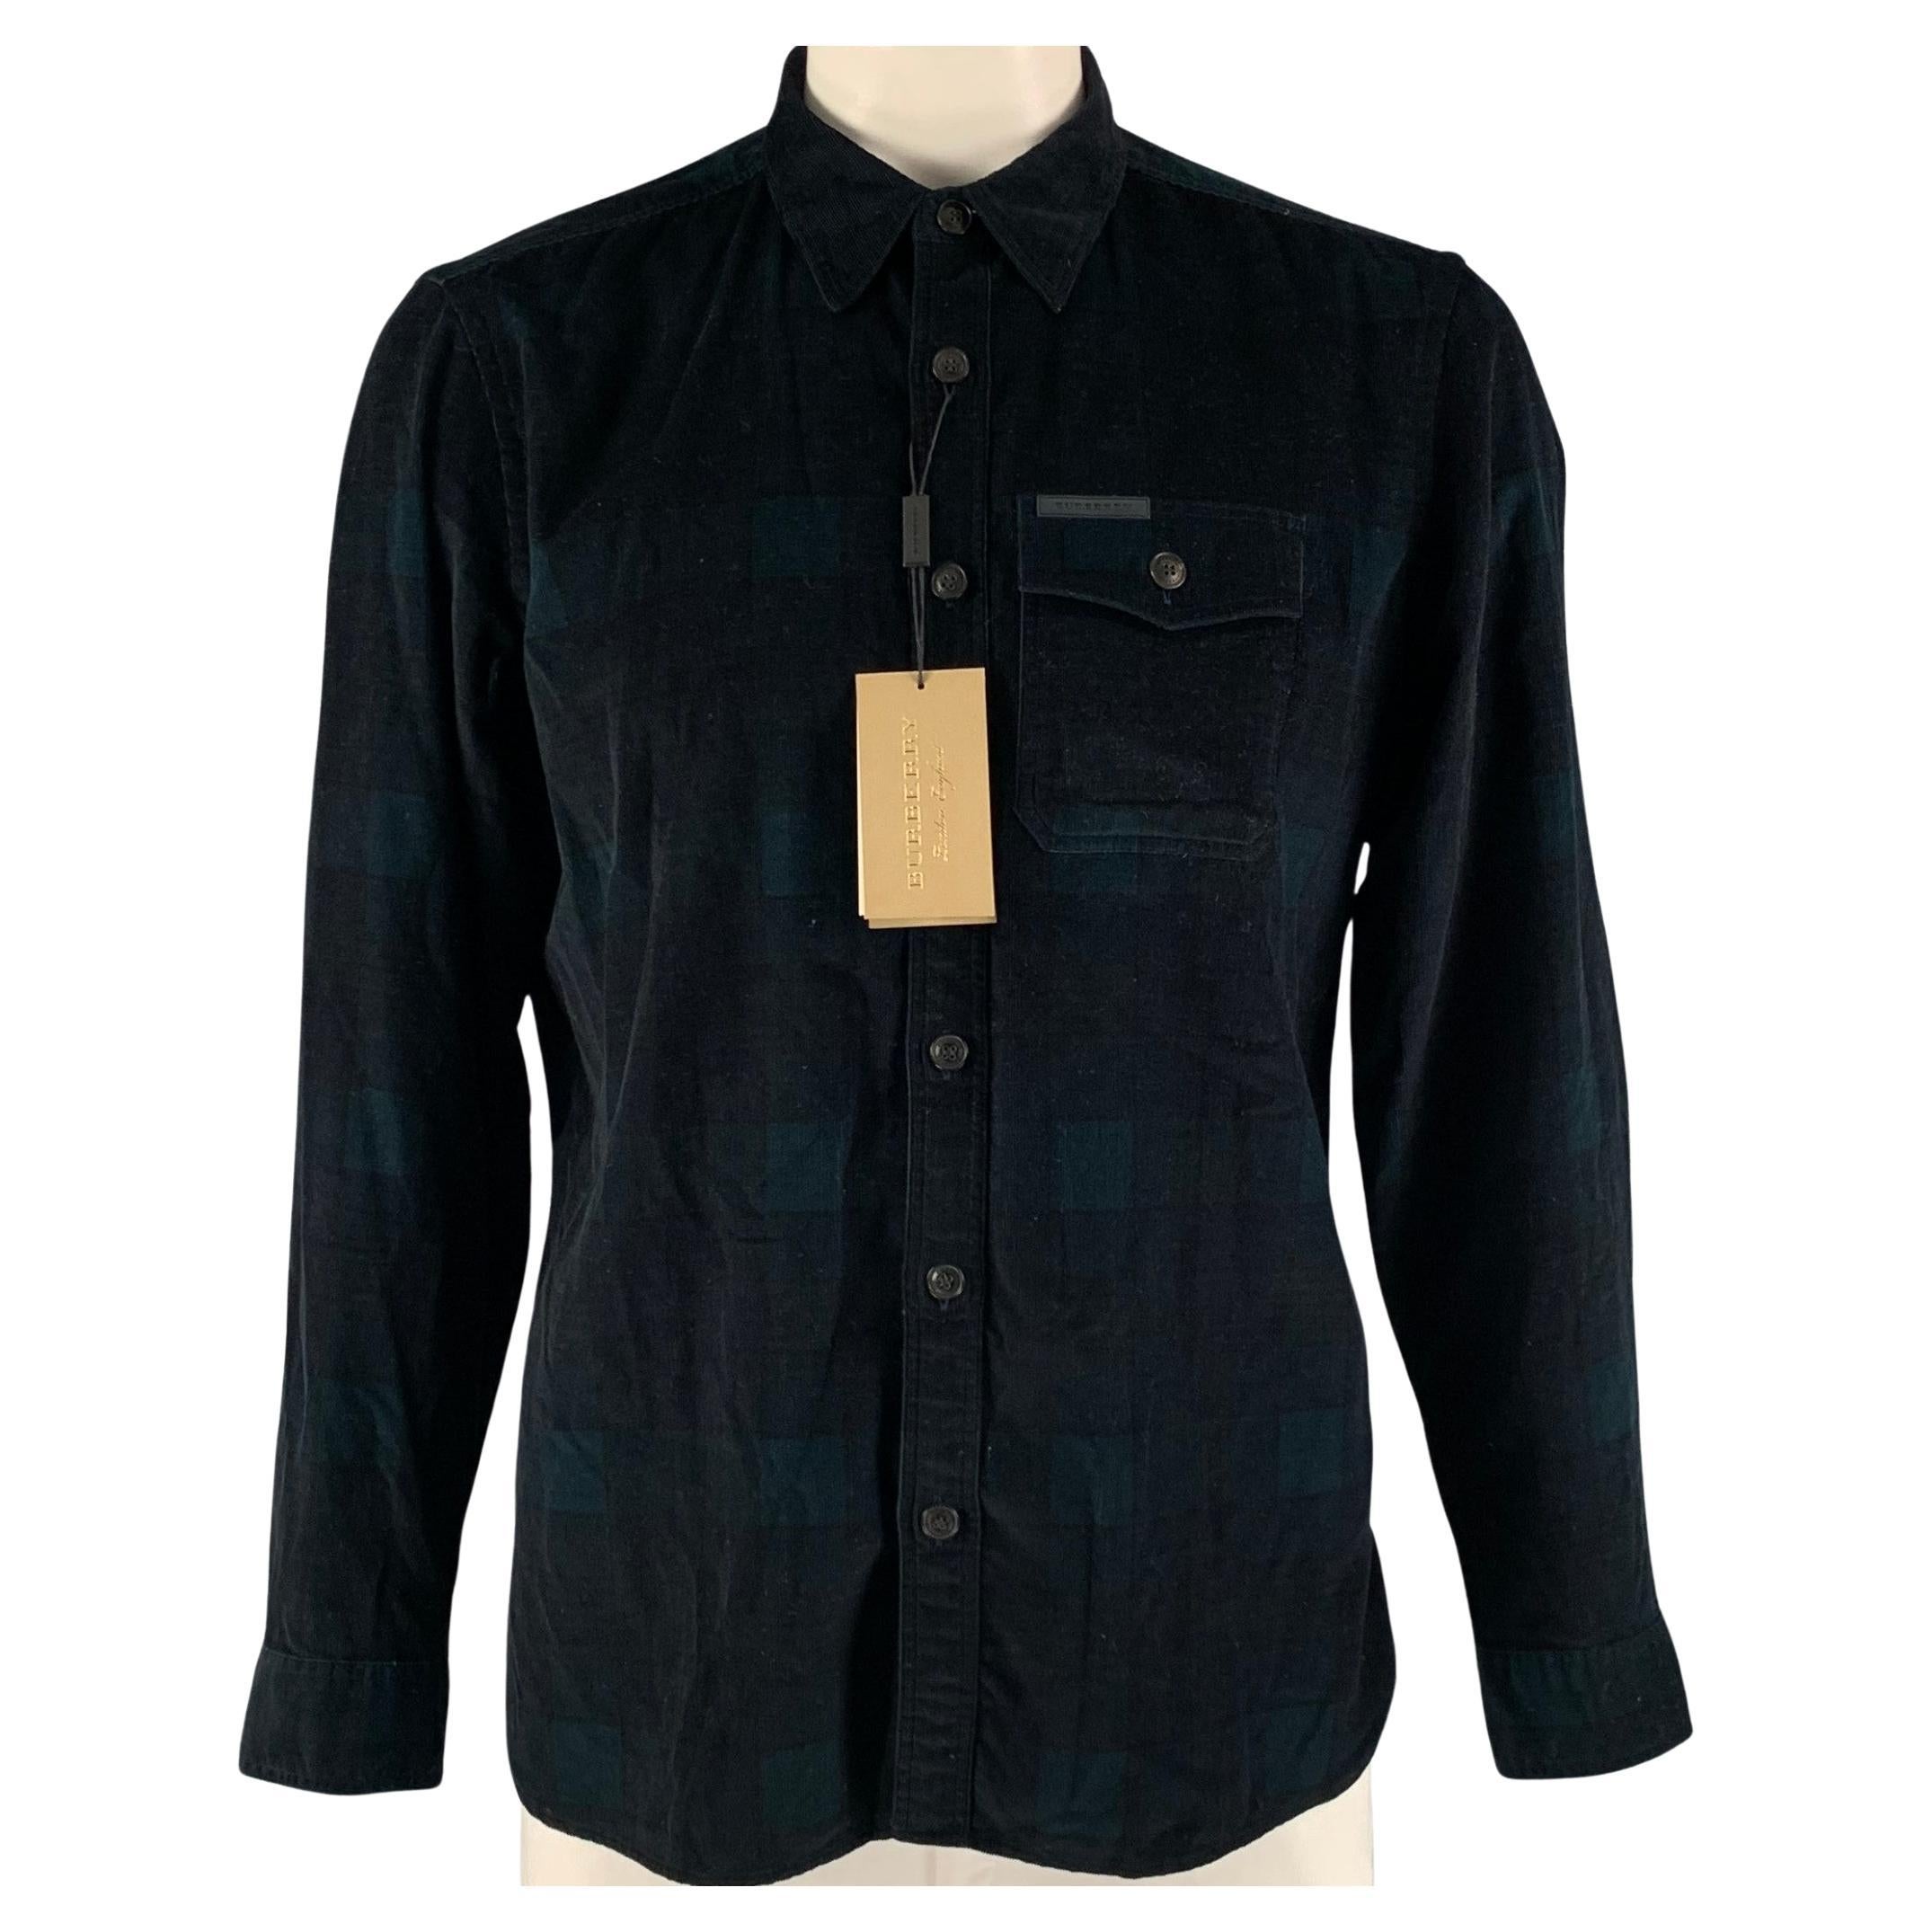 Burberry Button Down Shirt in Black XL